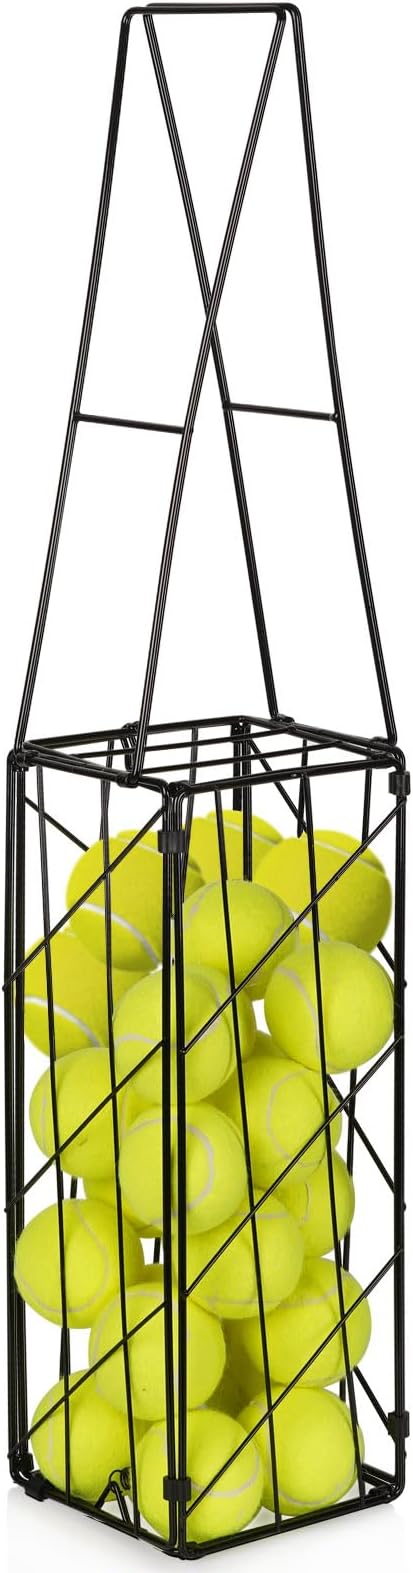 exttlliy tennis ball hopper ball basket portable pickleball hopper picker  ?exttlliy b0cdlf83b1